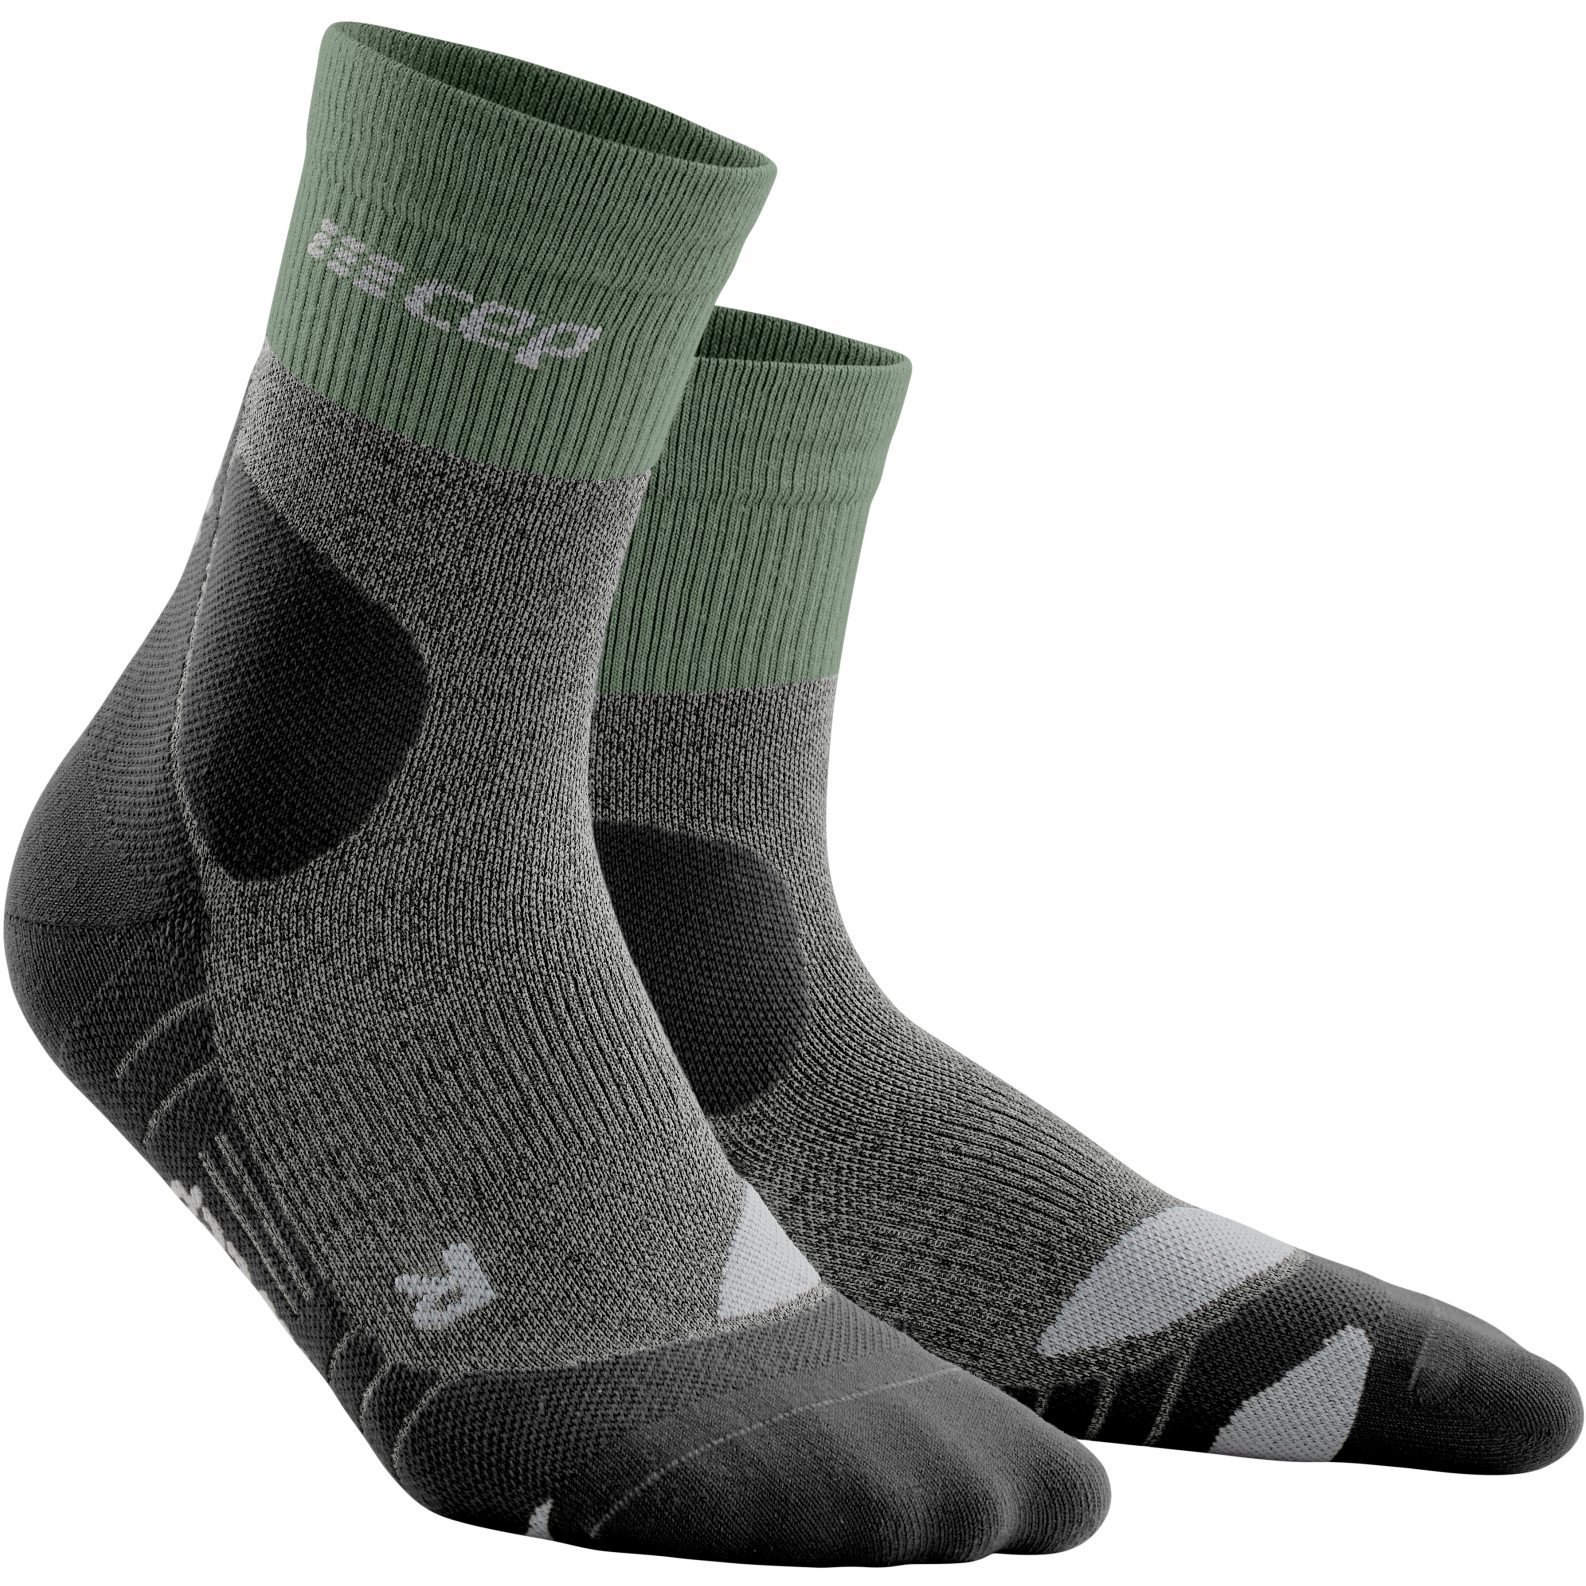 Image of CEP Hiking Merino Mid Cut Compression Socks Men - green/light grey